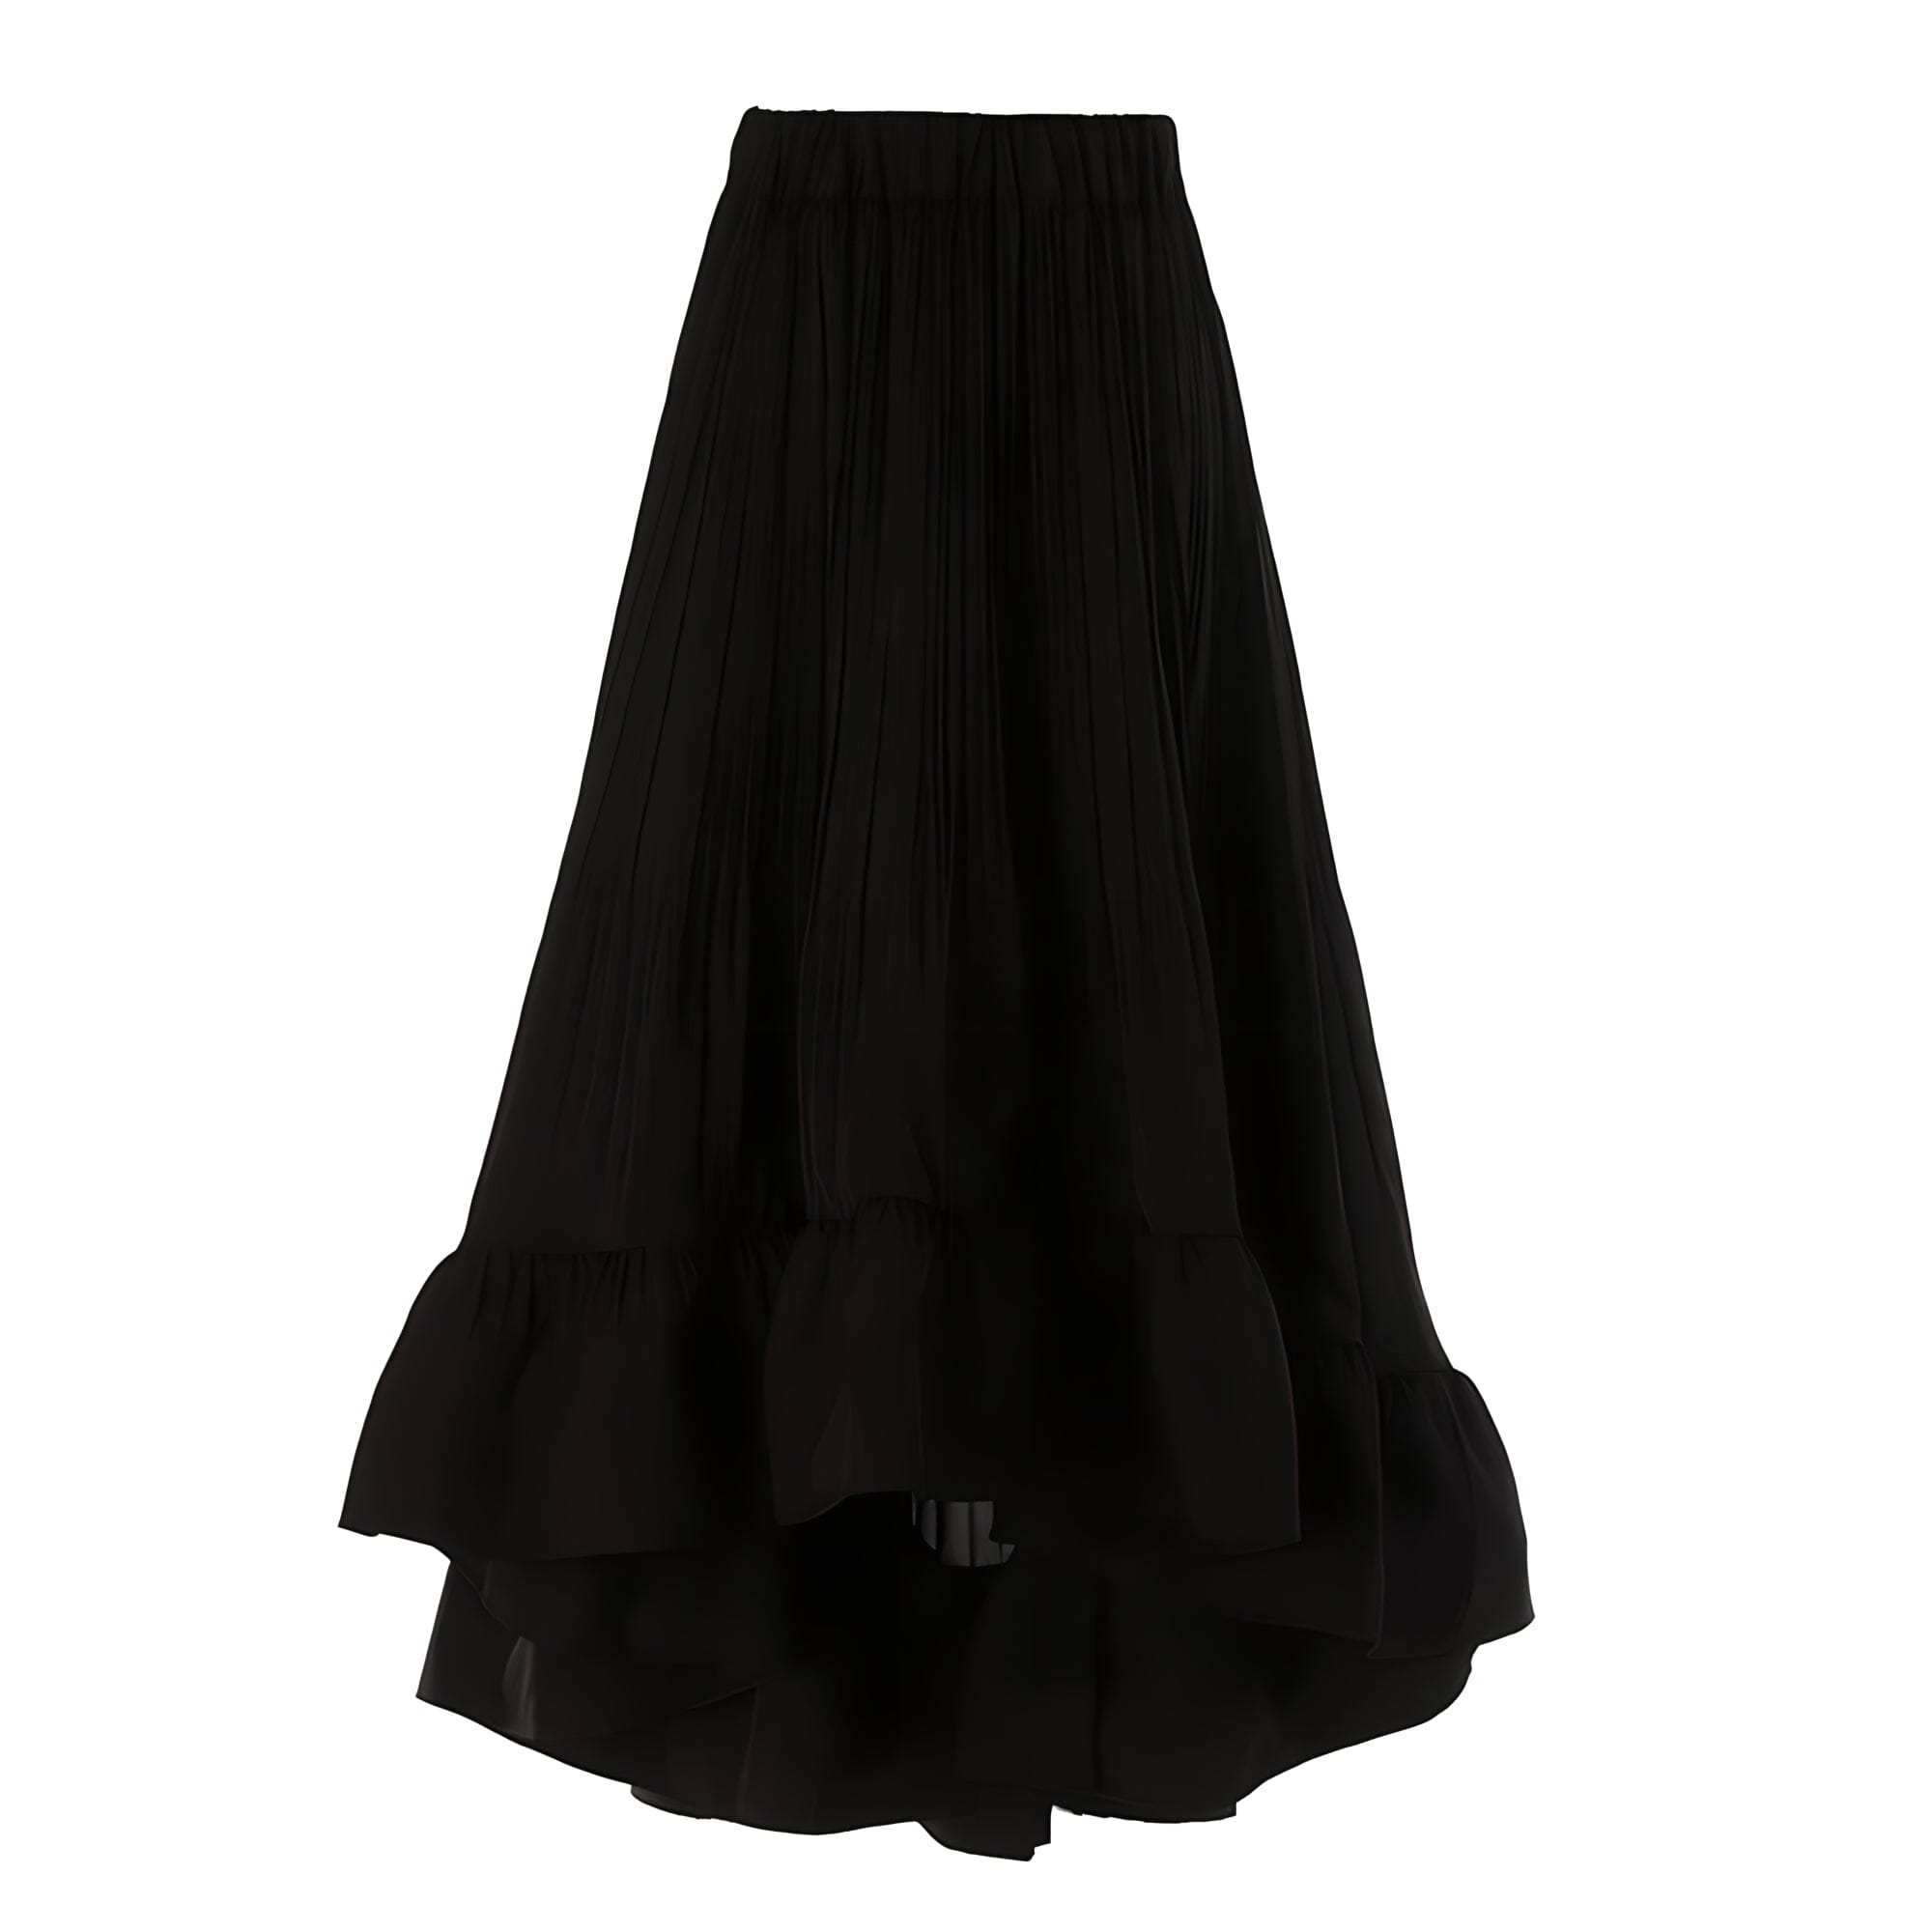 The Isidora High Waist Pleated Skirt - Multiple Colors 0 SA Styles Black S 